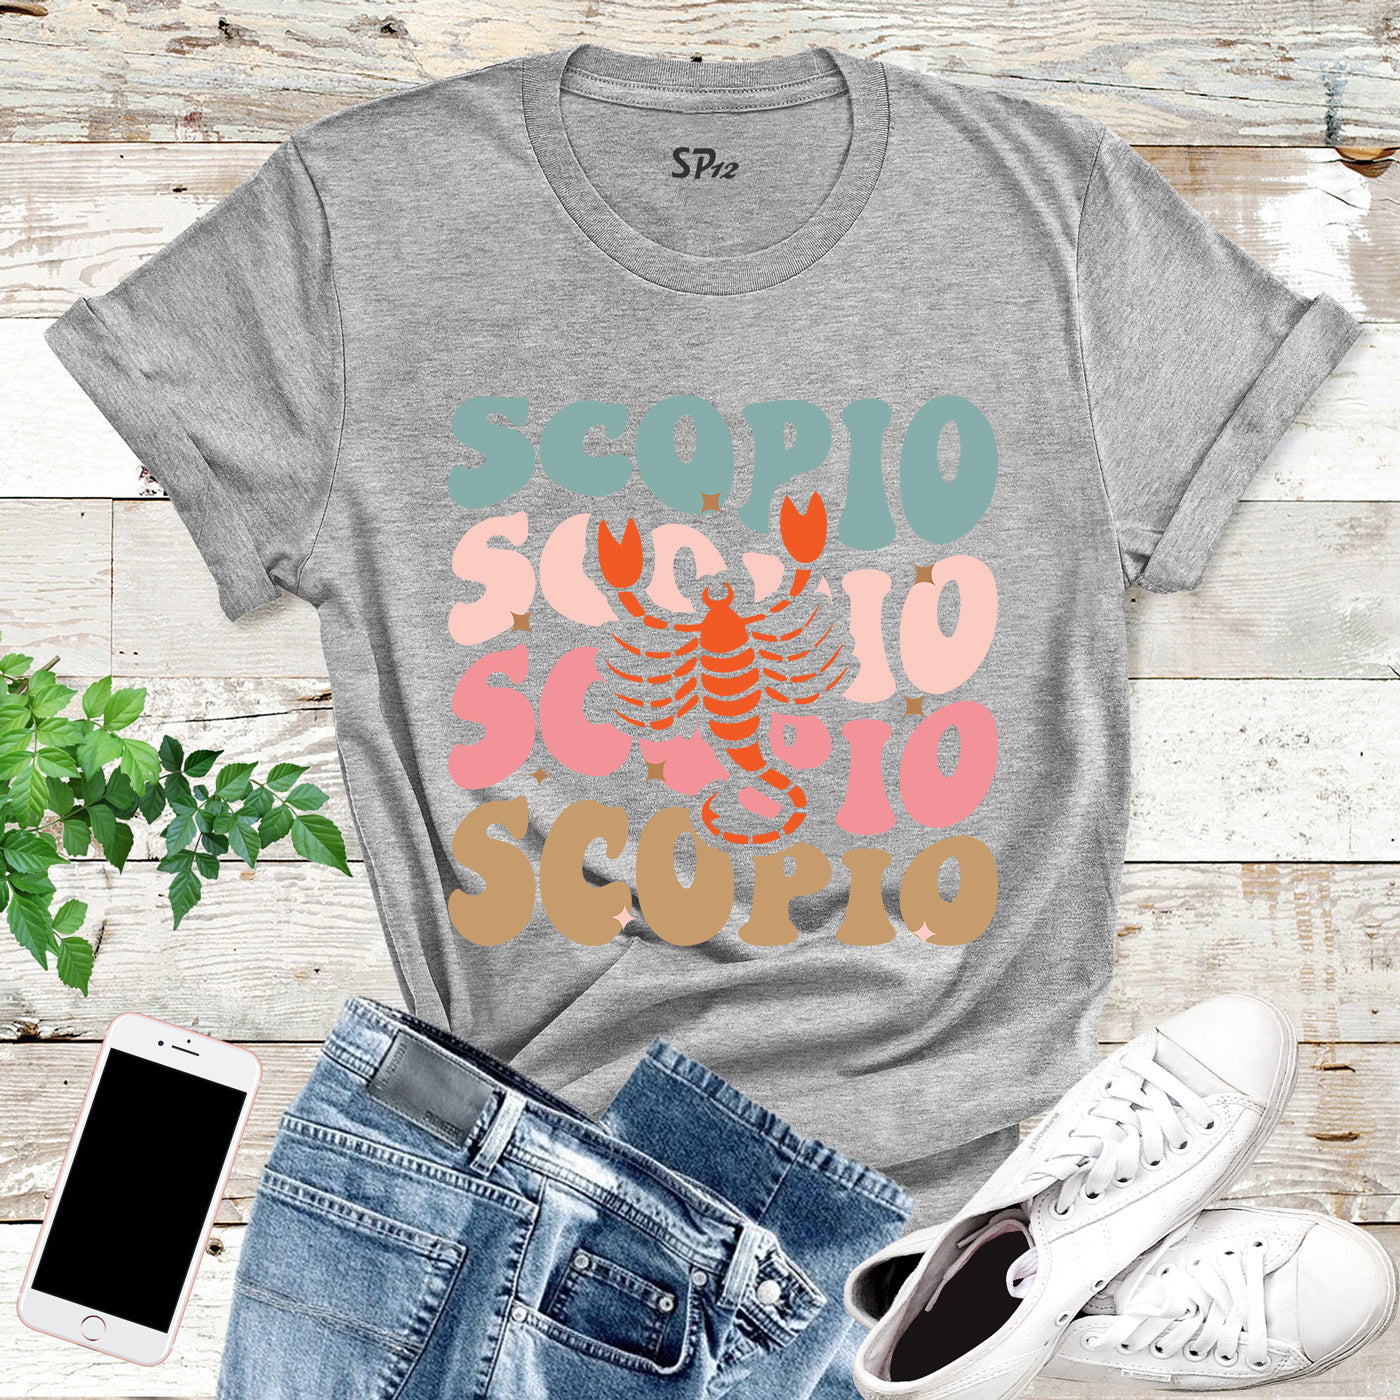 Scorpio Funny T Shirt